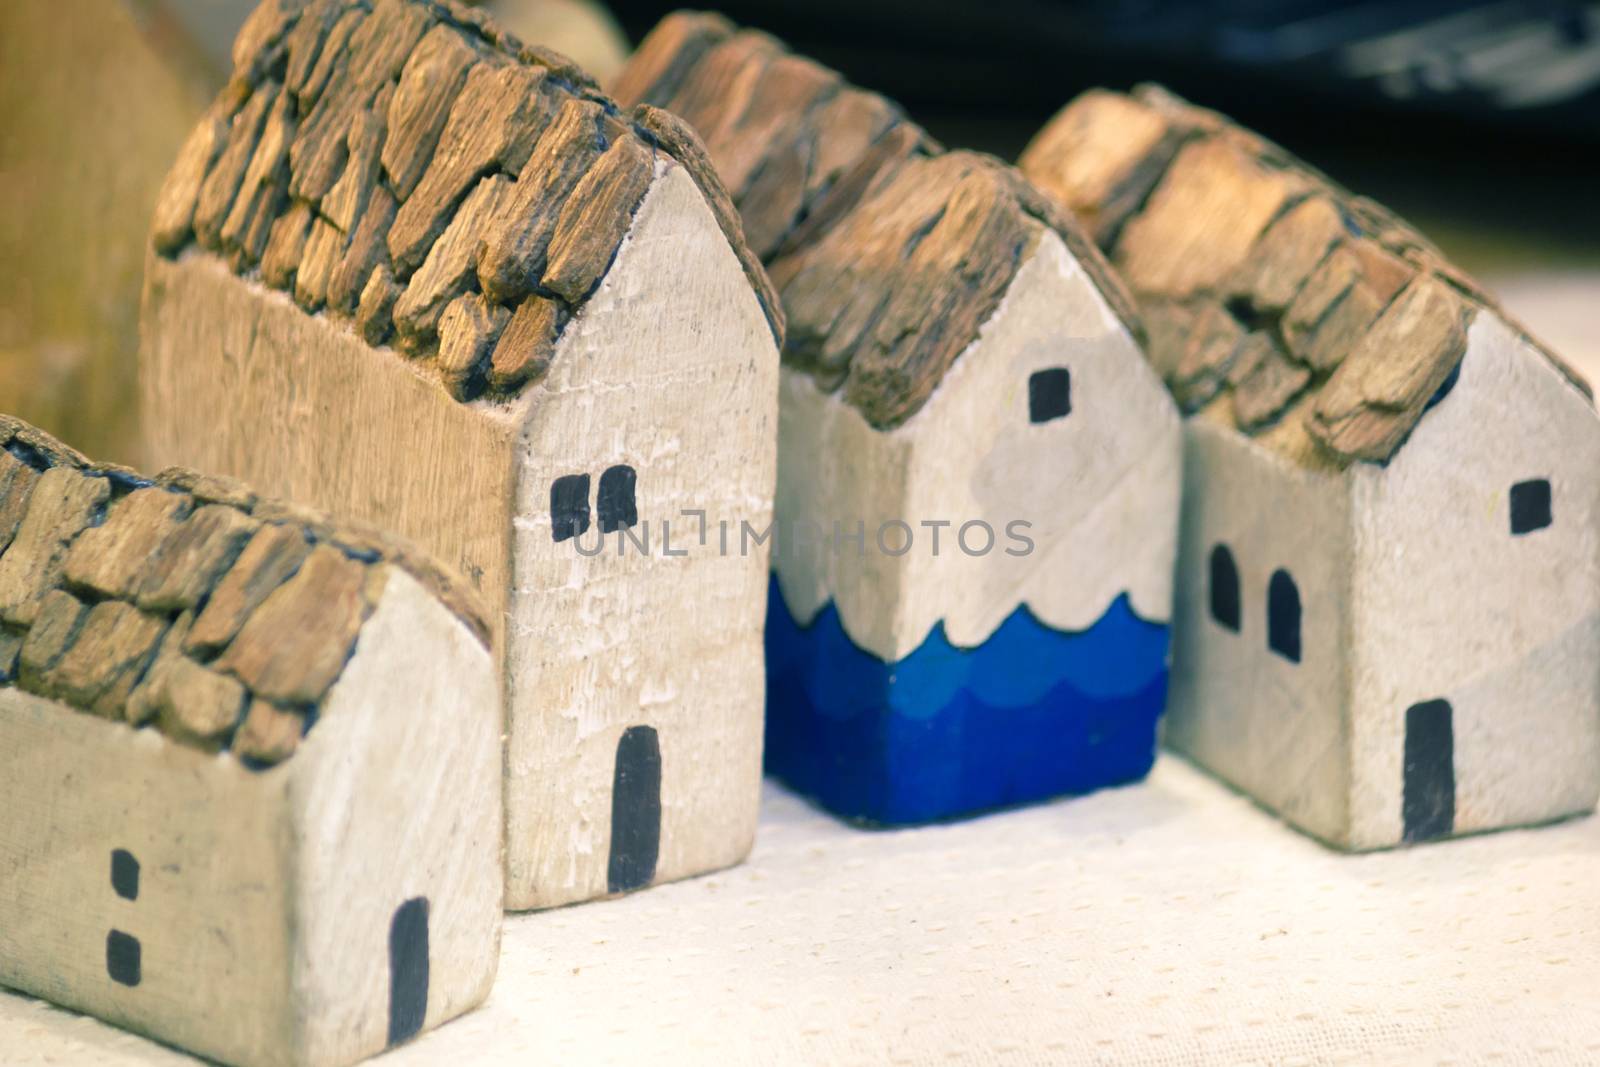 Miniature House On Top Table, Building Blocks Arranged In Row. by rakoptonLPN